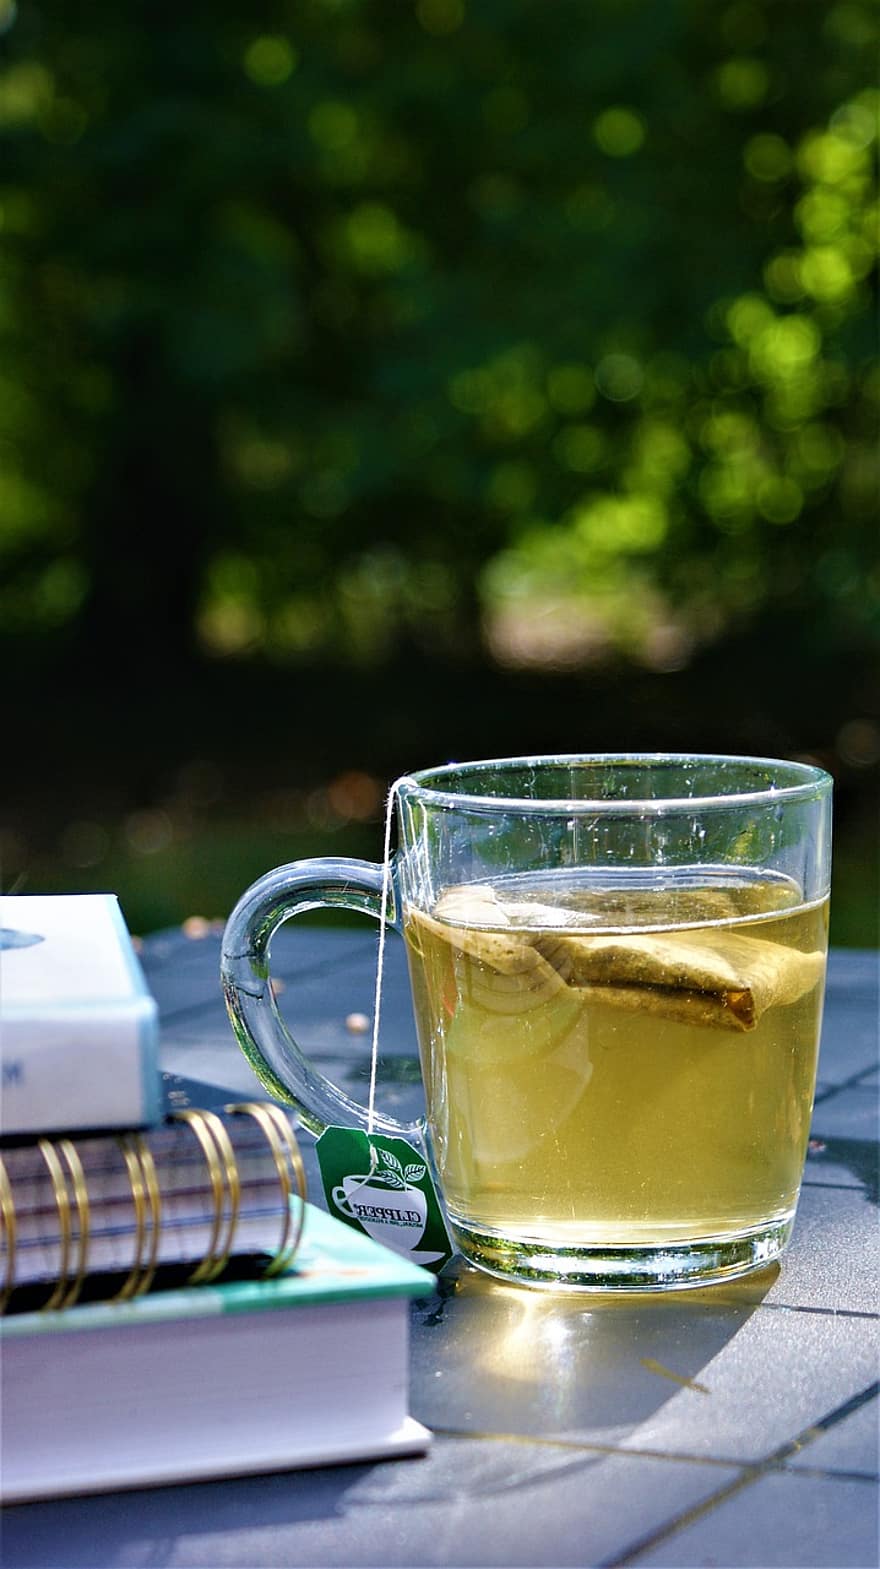 herbata, Puchar, drink, napój, Rumiankowa herbata, zdrowy